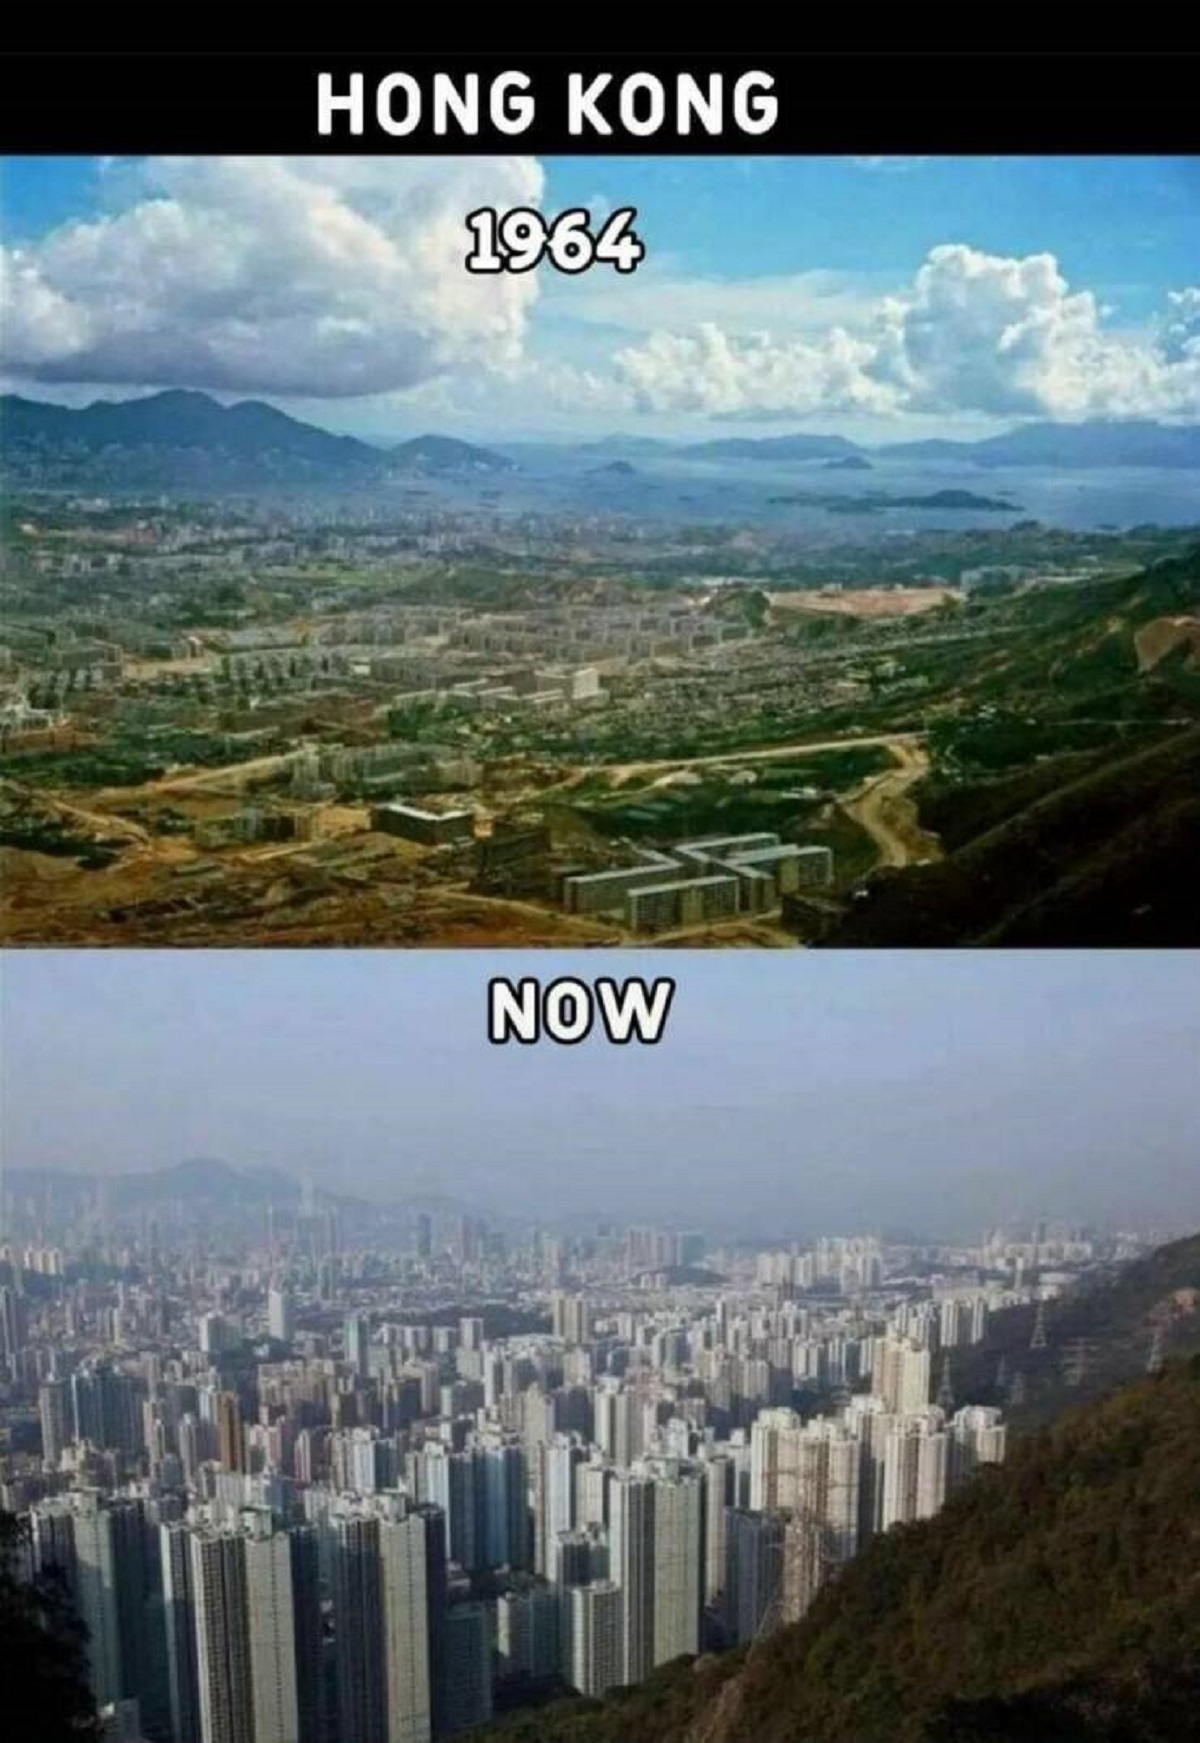 hong kong 1964 vs now